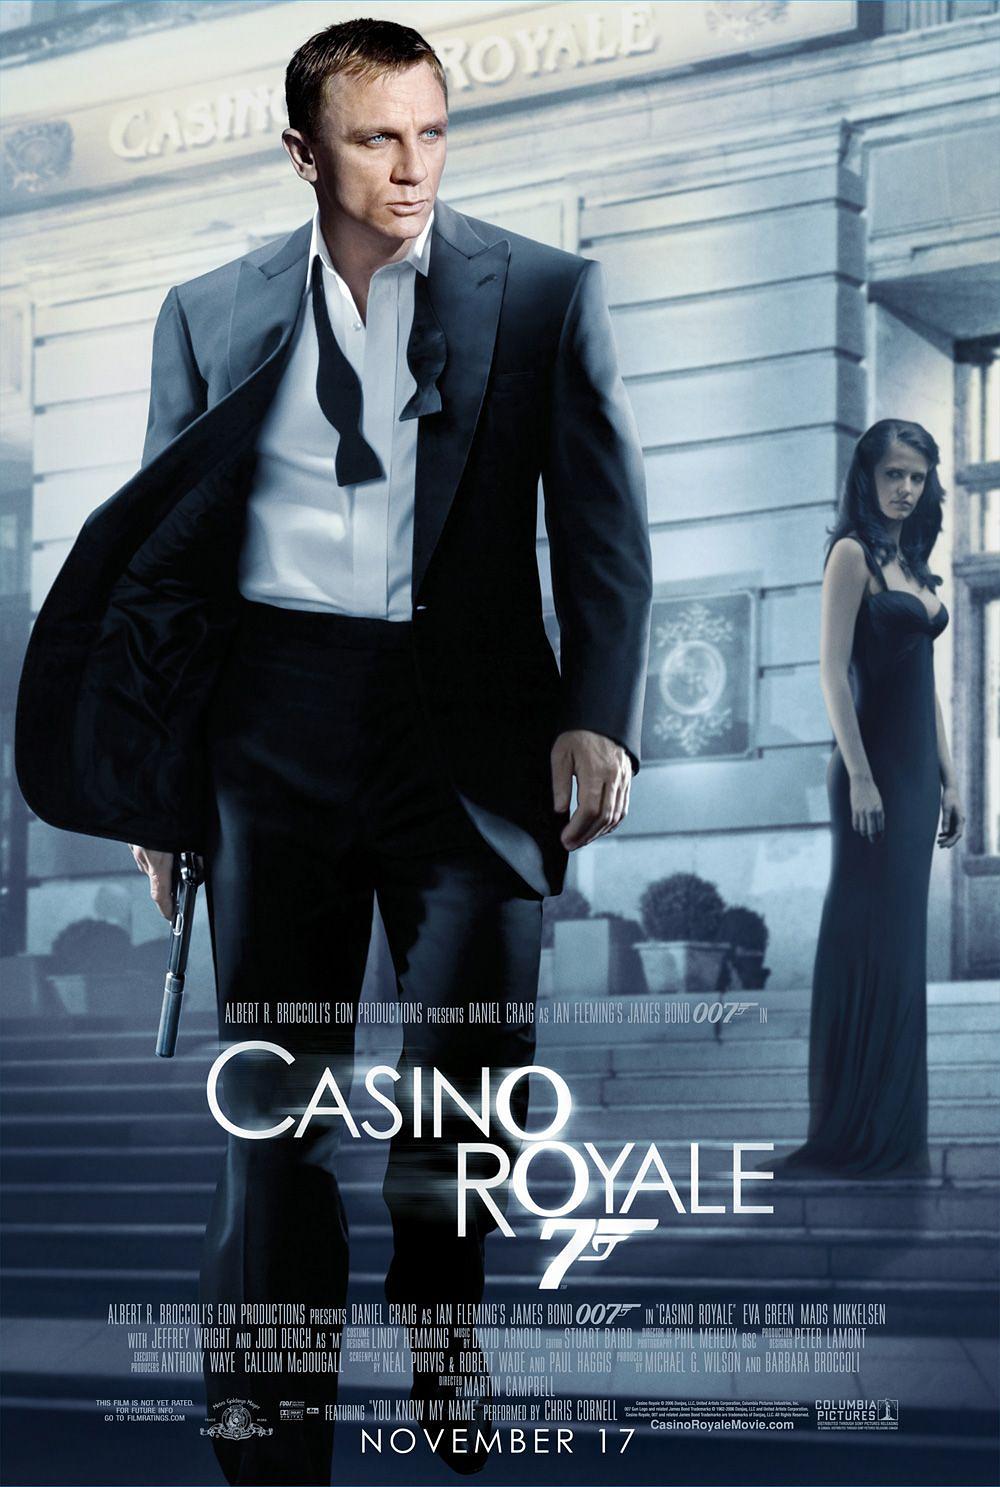 007:大战皇家赌场/007大战皇家赌场 Casino.Royale.2006.REMASTERED.1080p.BluRay.x264.DTS-SWTYBLZ 15.73GB-1.png